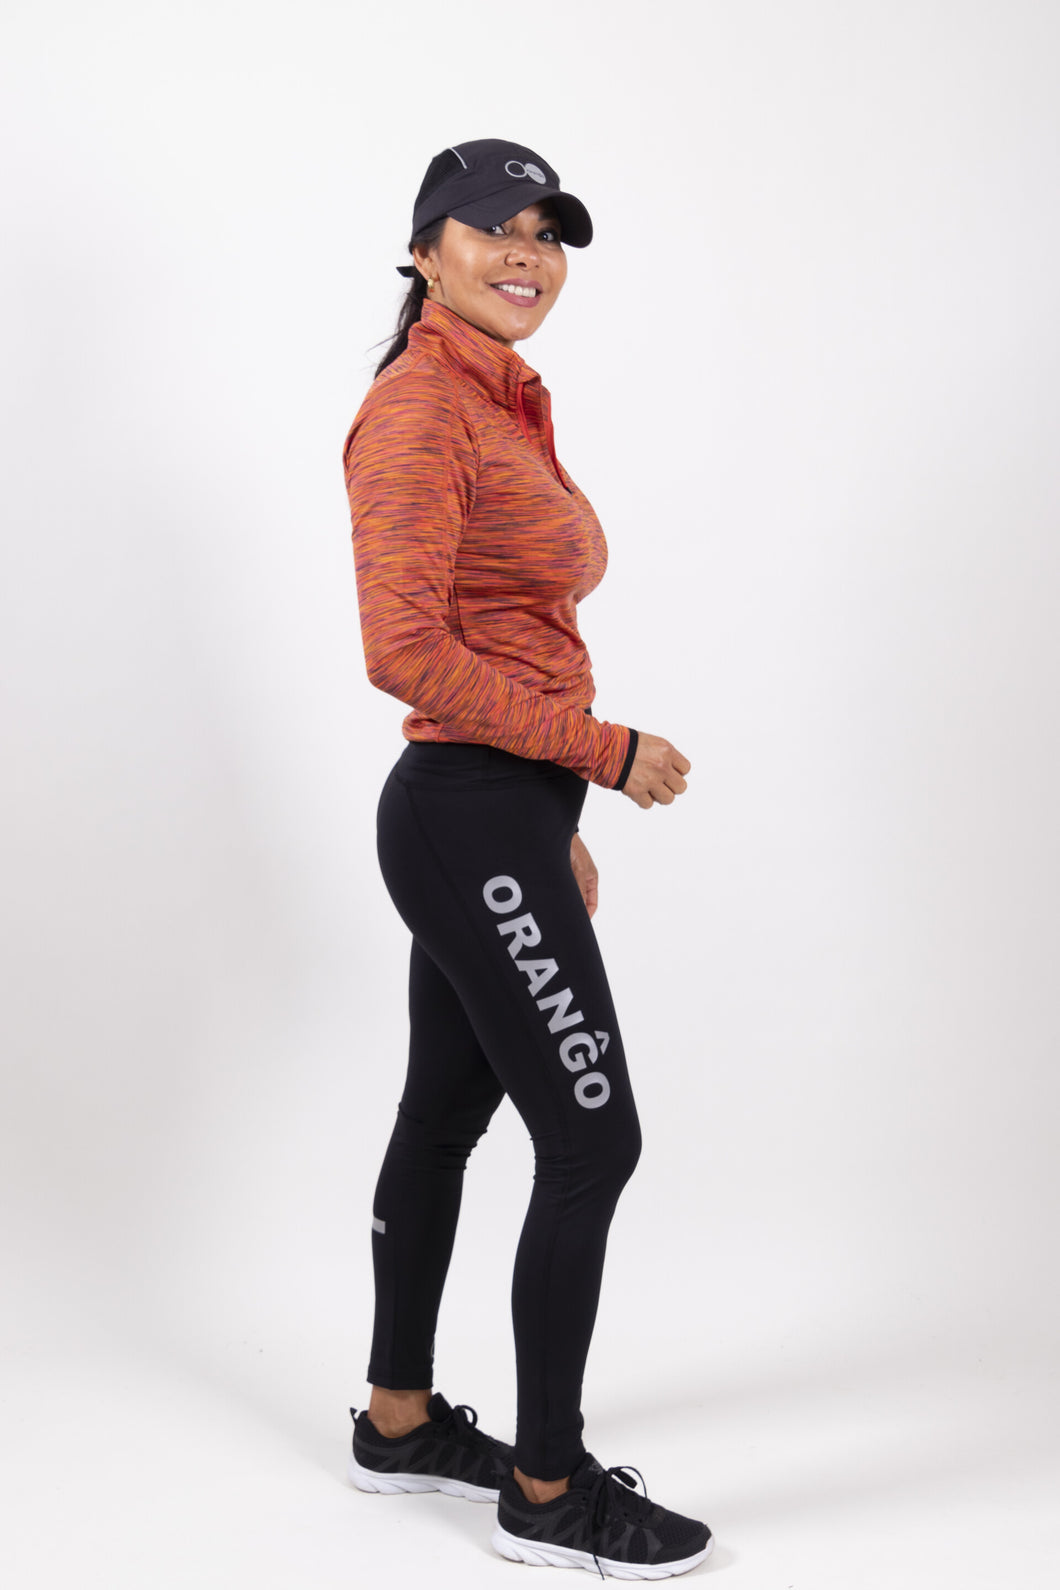 Orango Running - Womens Tight High Waist Safety - Black - P010-202S